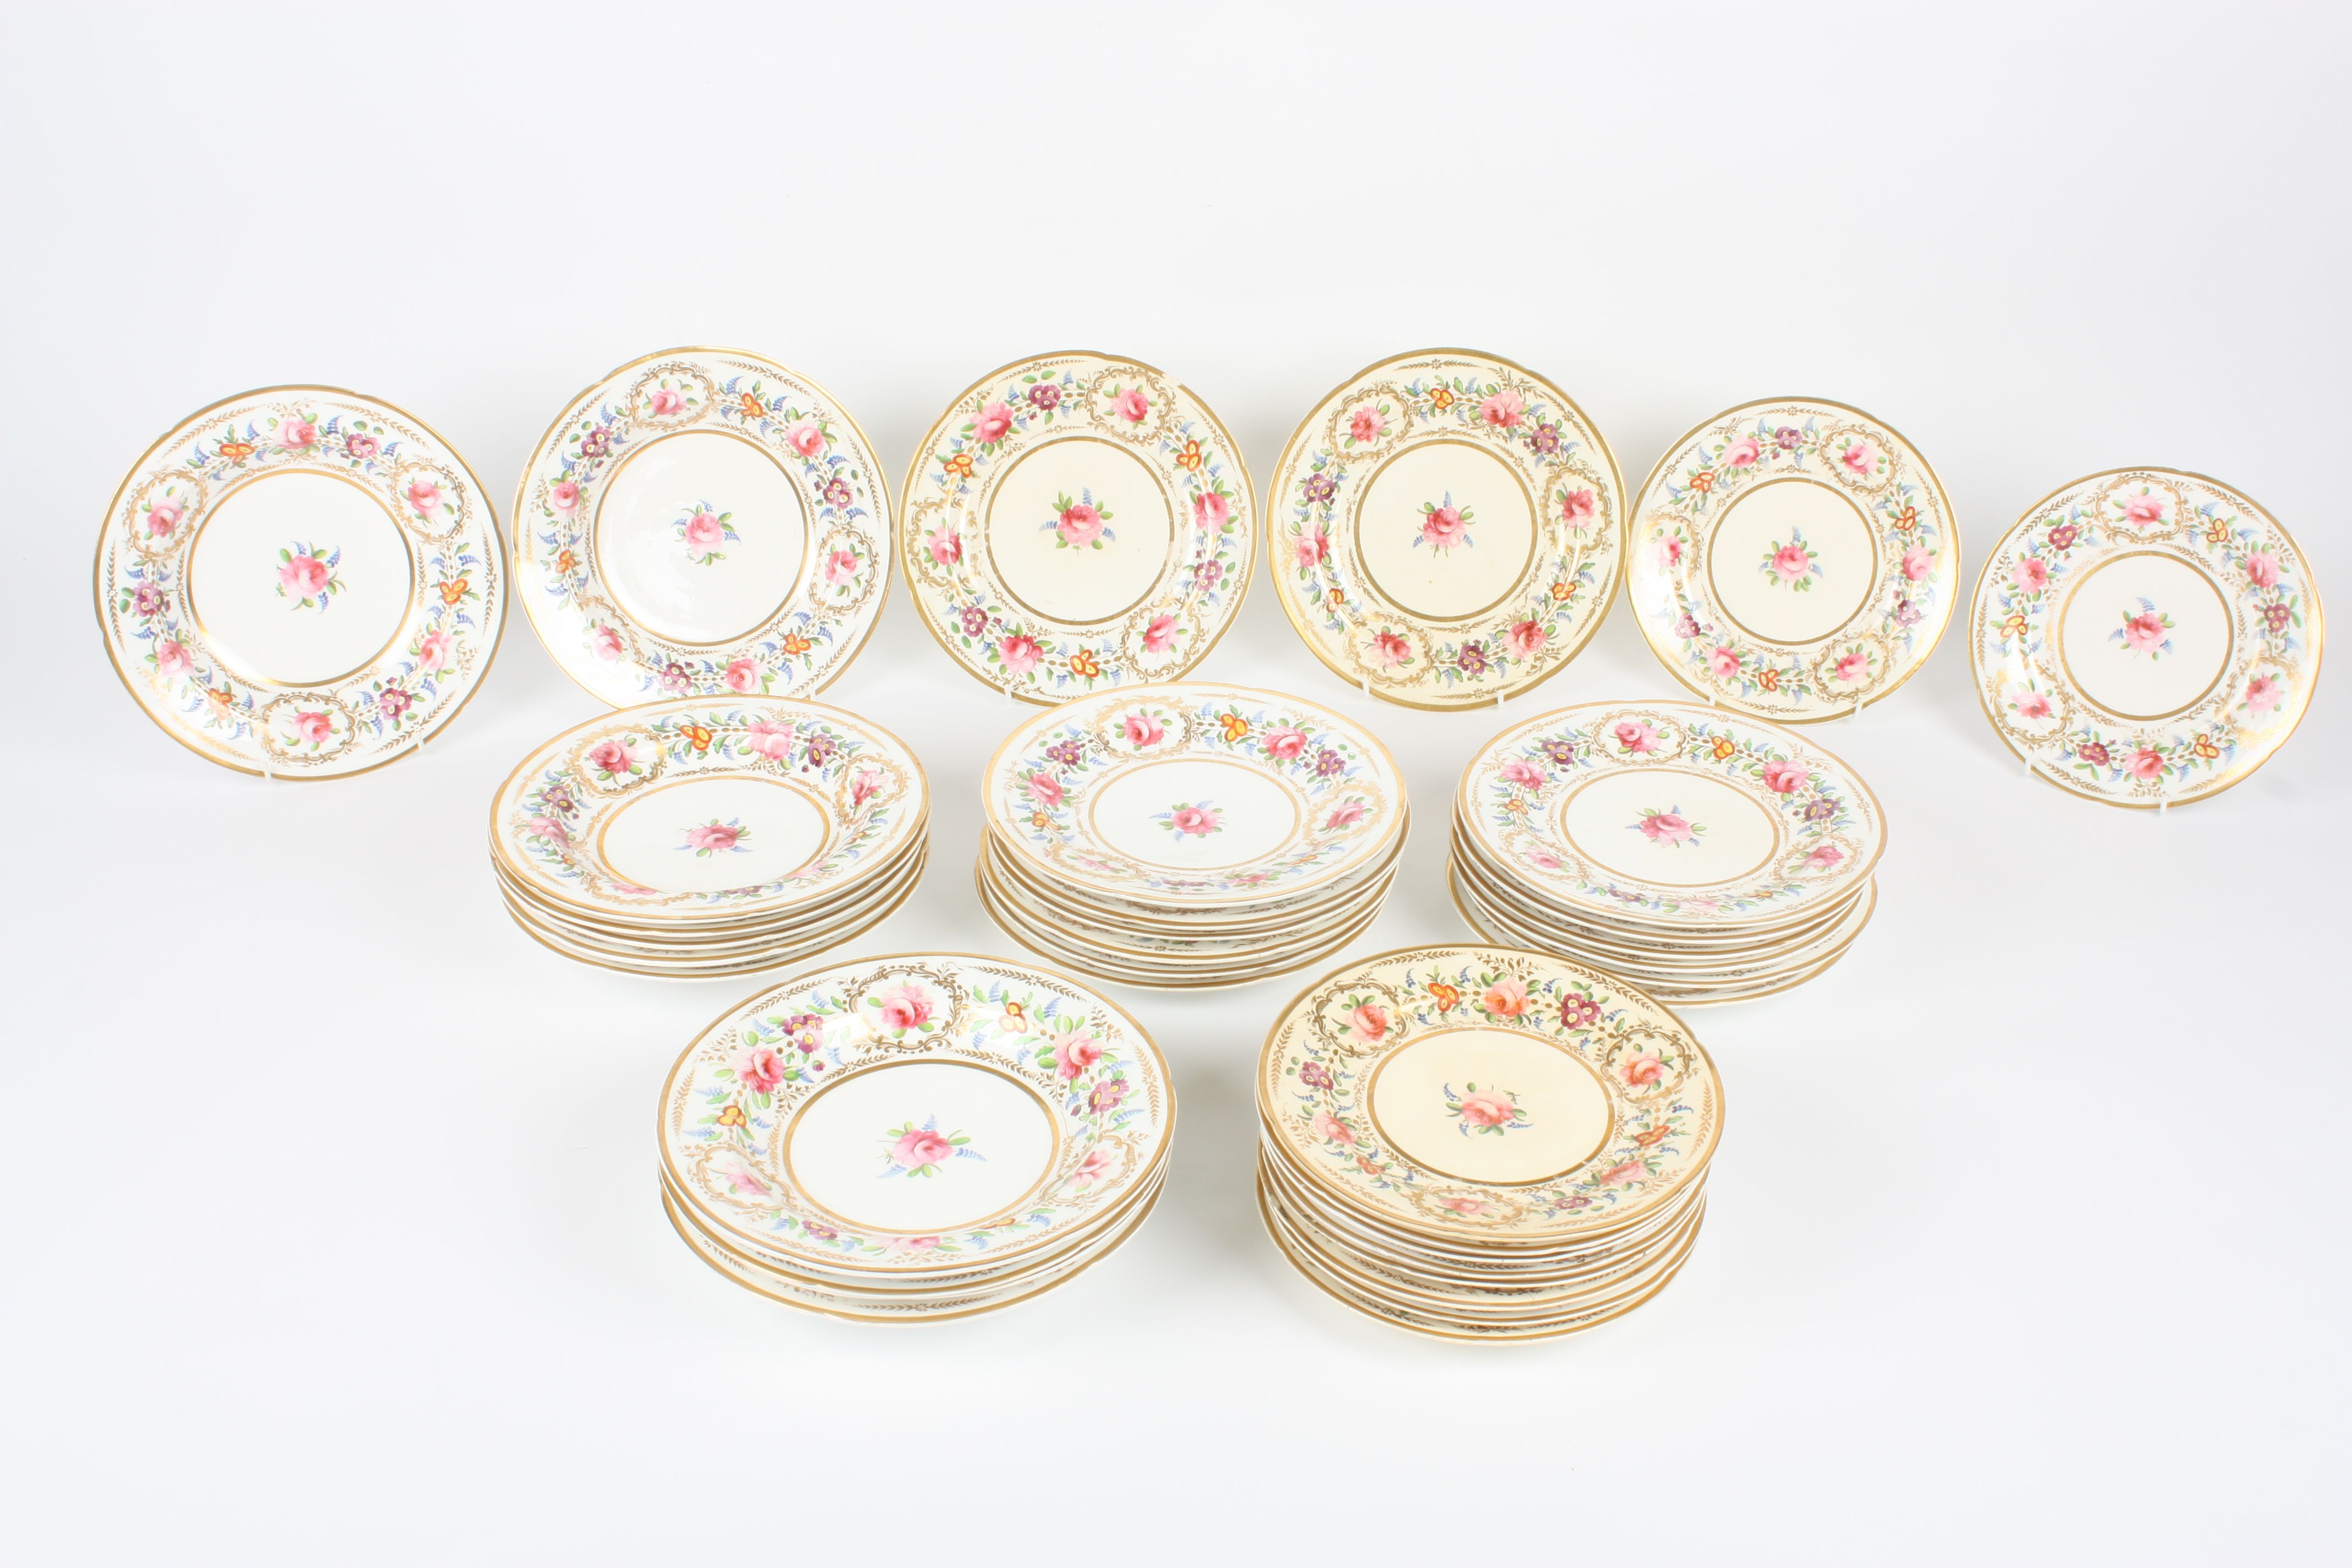 A set of Coalport Felspar porcelain plates, painted with flowers and gilt highlights, comprising: